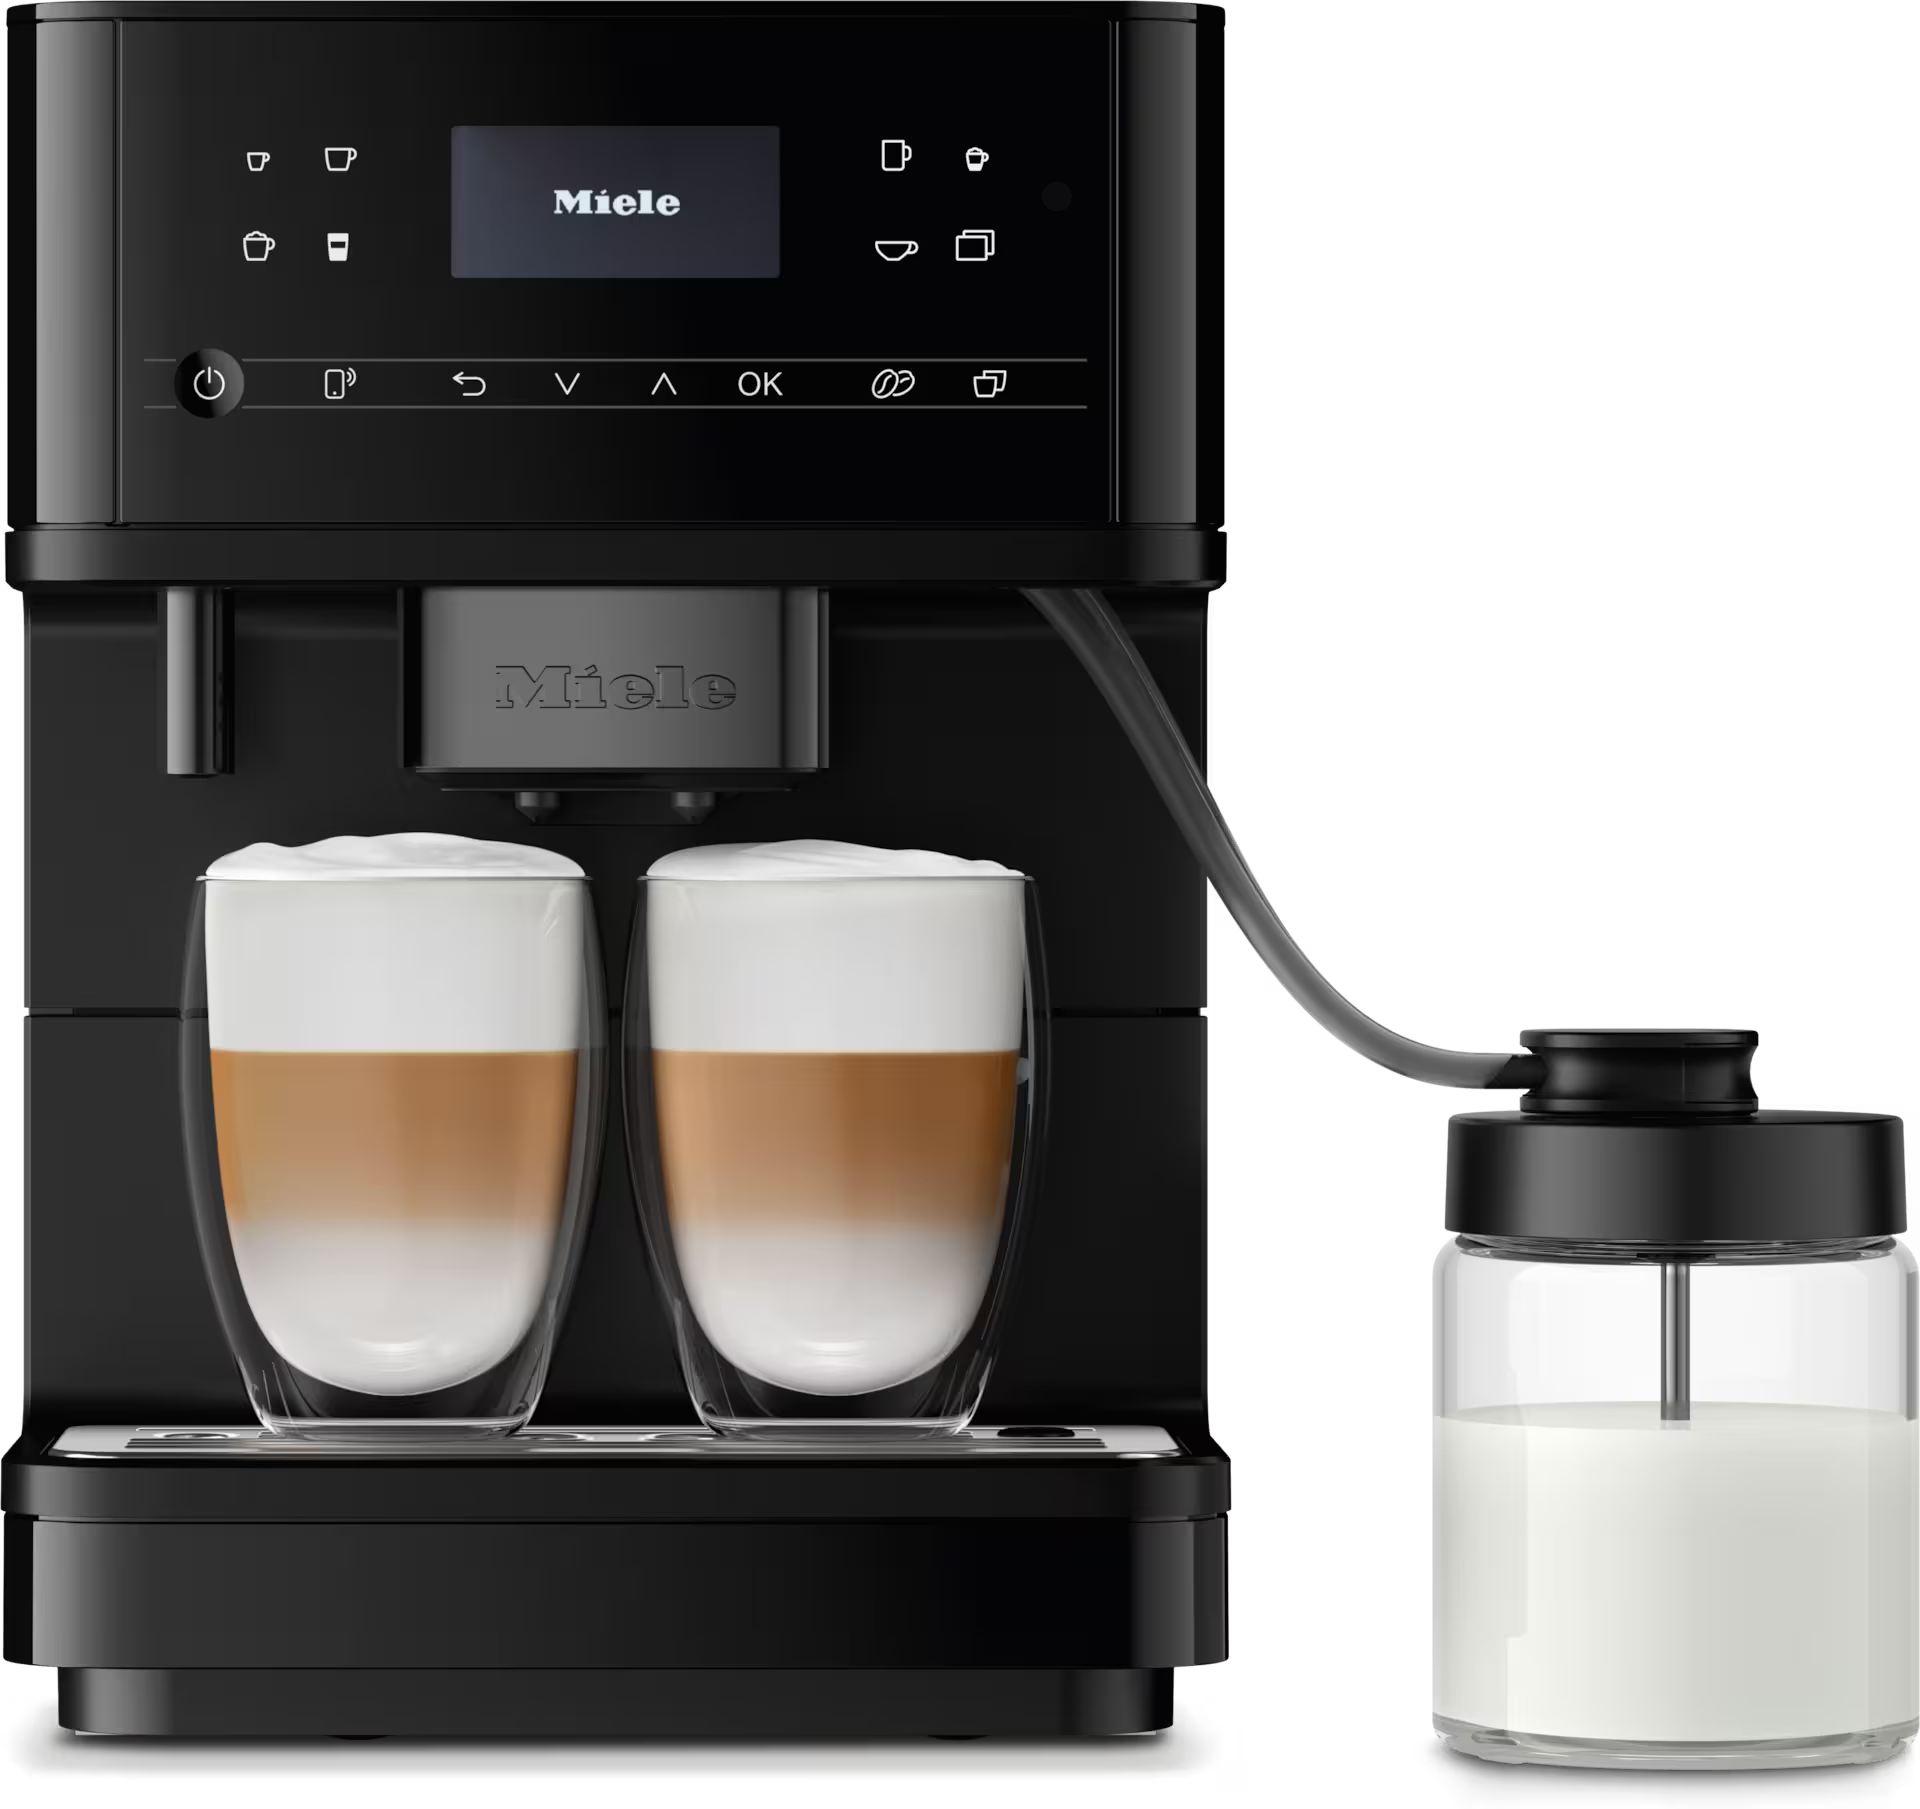 Kaffeevollautomat »CM 6360 125 Edition«